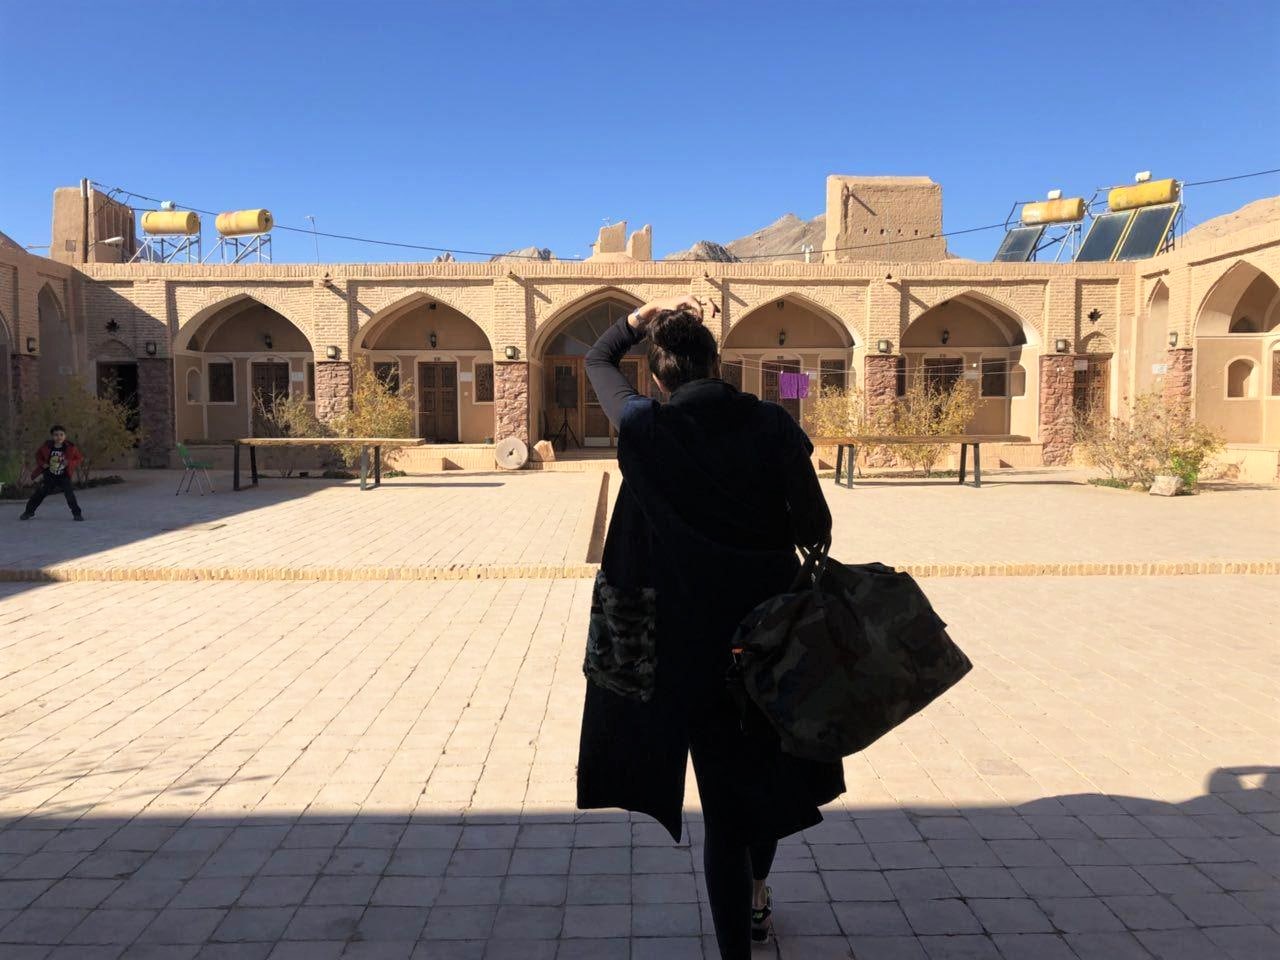 Desert اجاره خانه سنتی کویری در انارک اصفهان - 19